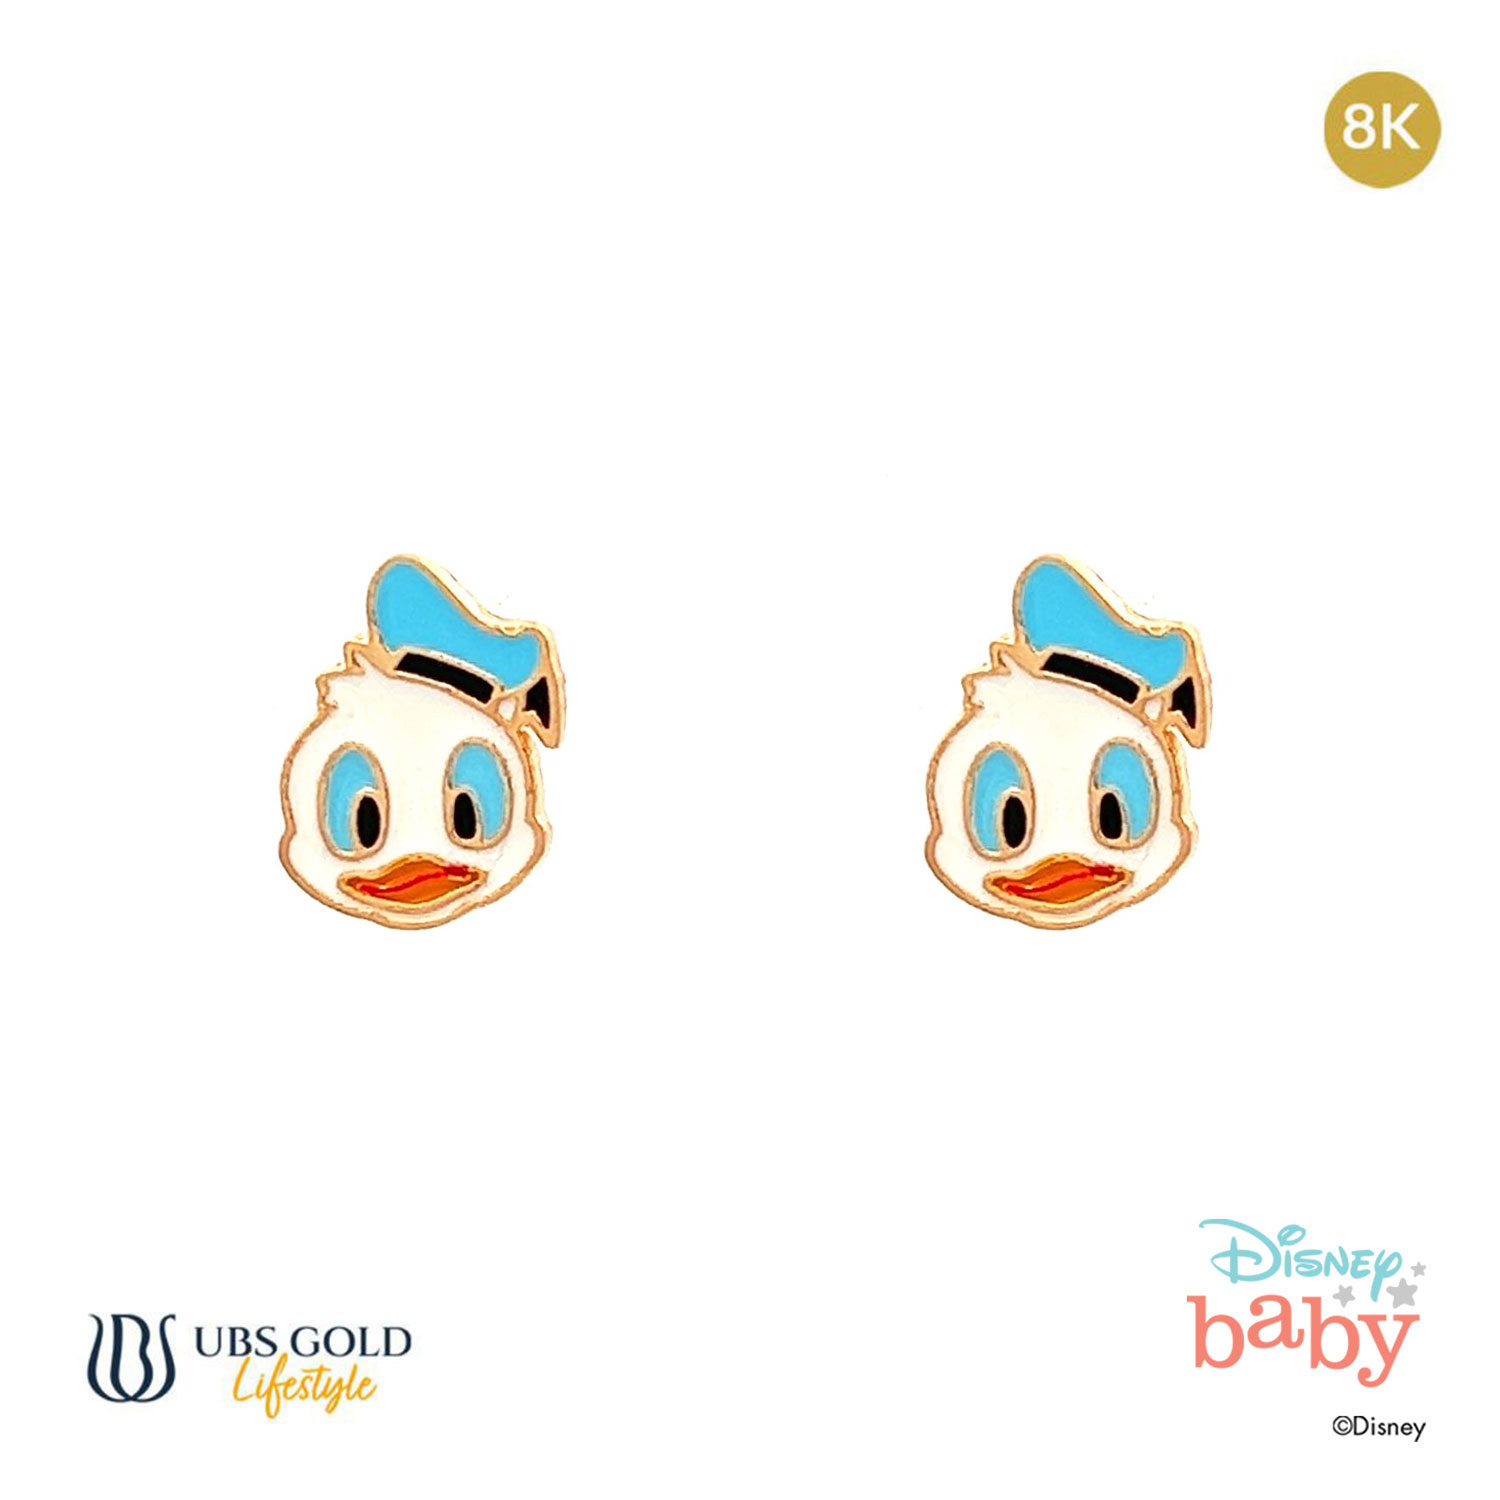 UBS Anting Emas Anak Disney Donald Duck - Awy0017T - 8K